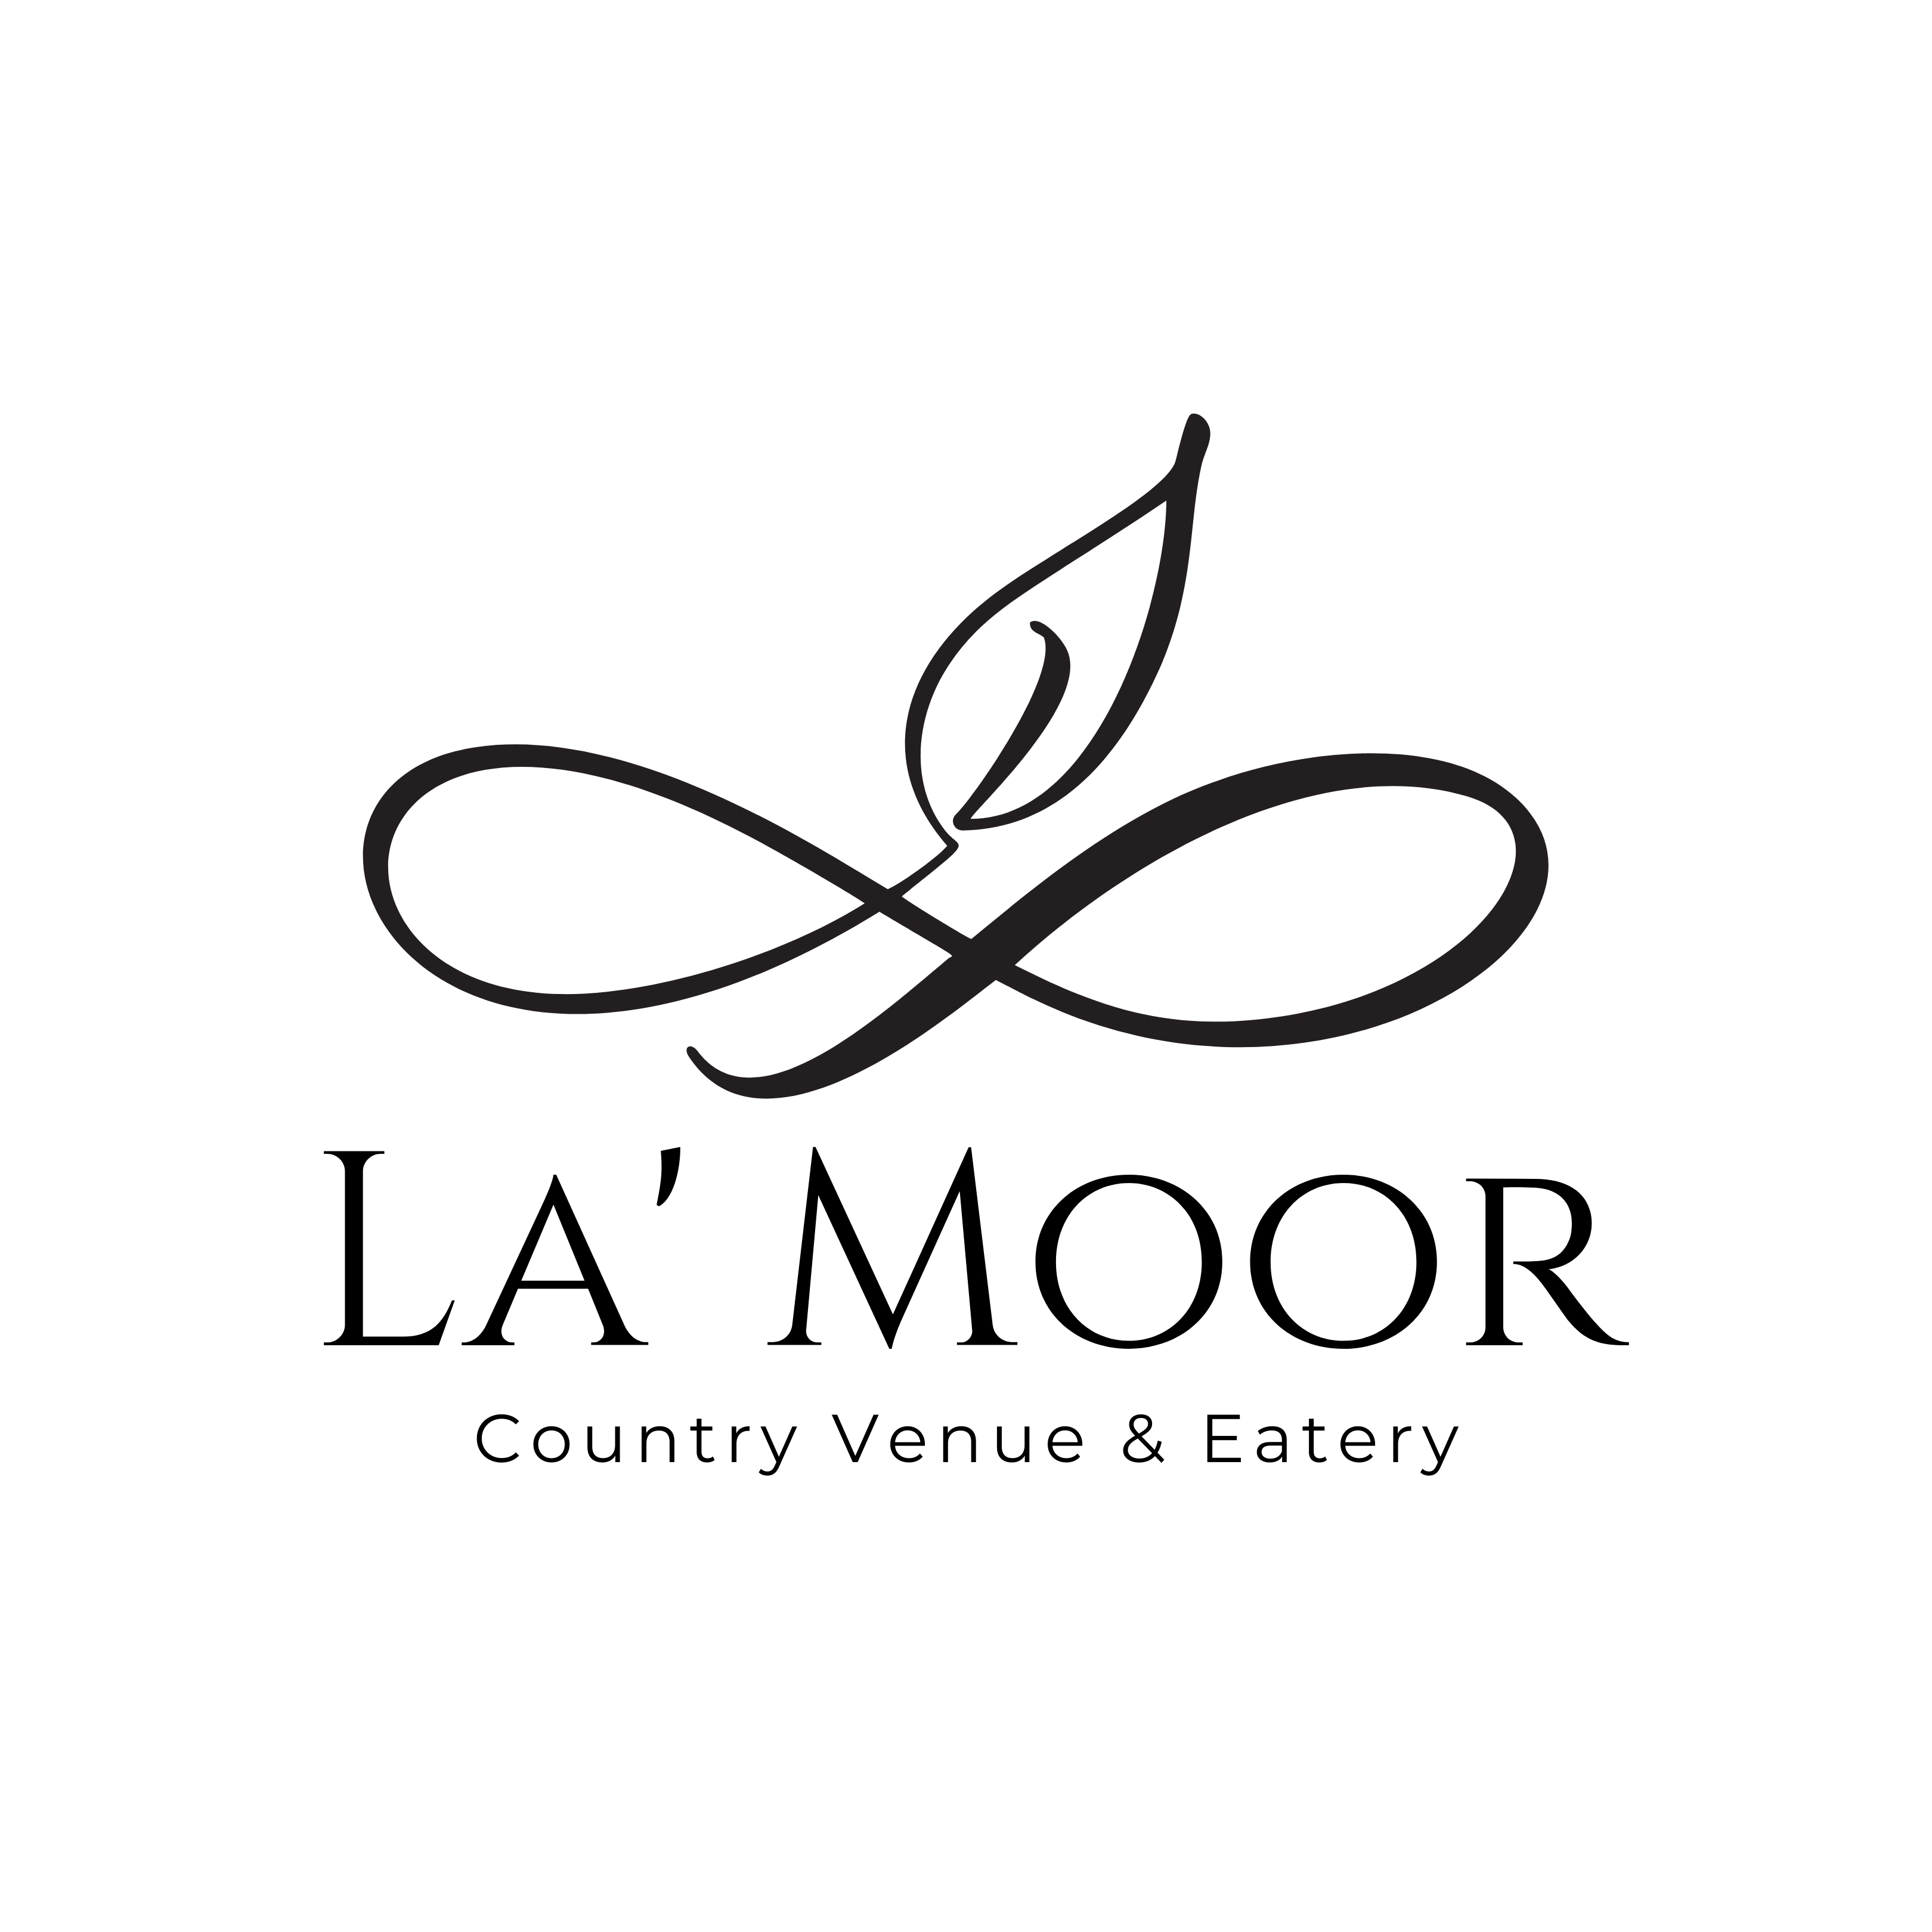 La Moor Country Venue & Eatery - Restaurant in Krugersdorp - EatOut